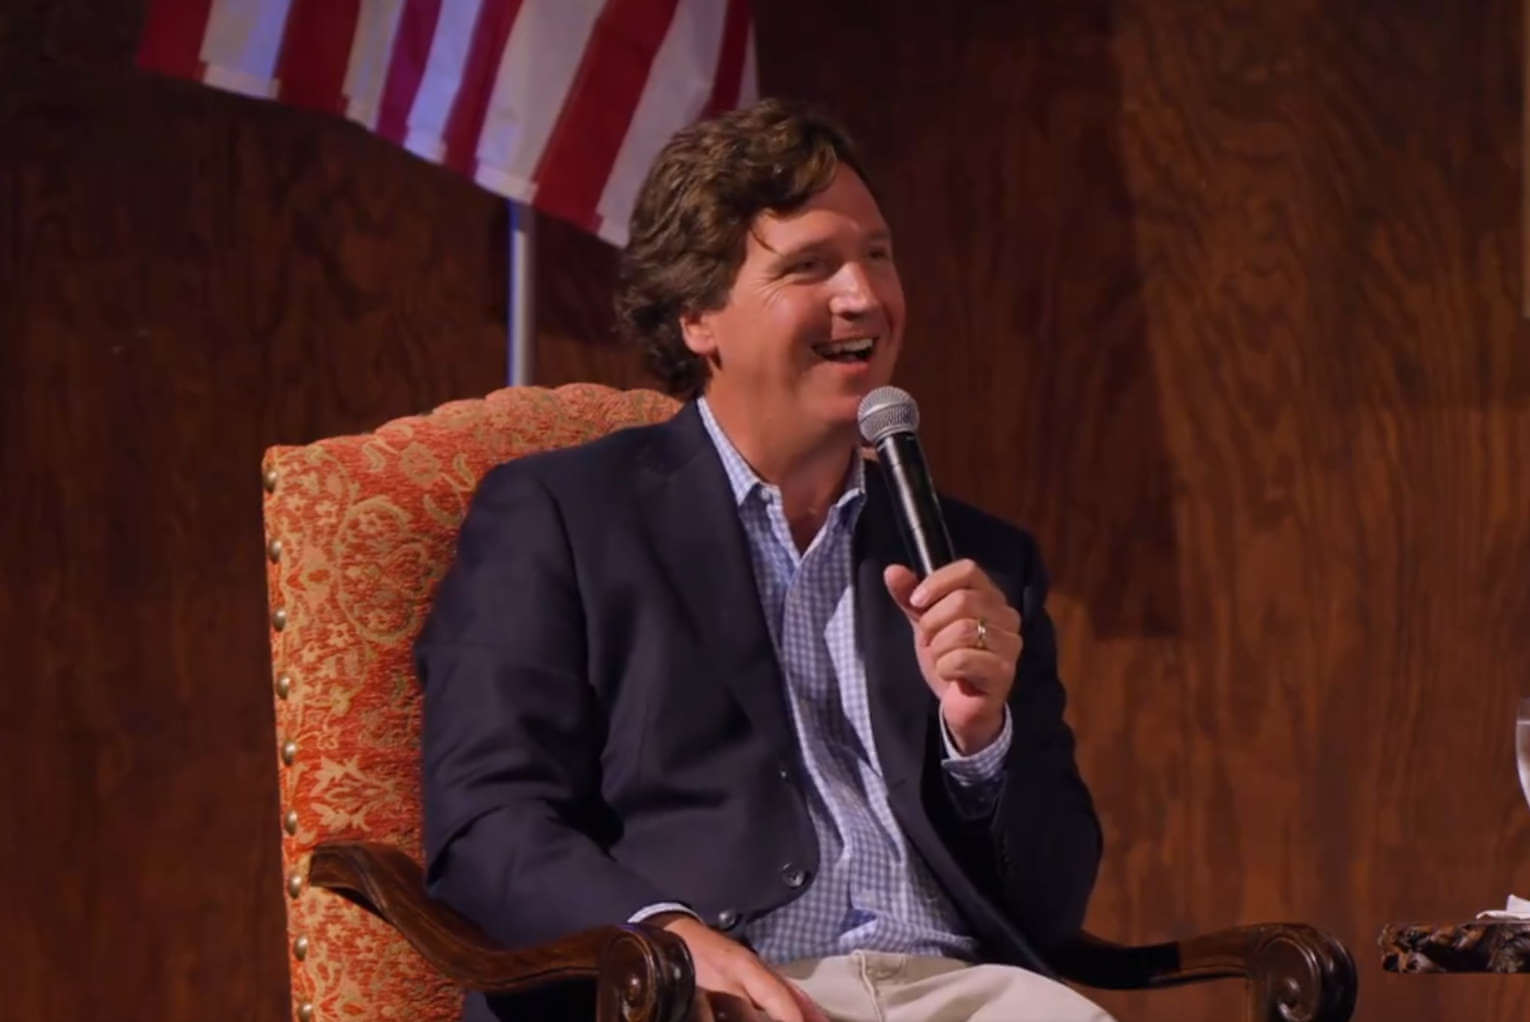 Tucker Carlson Talking About Spiritual Warfare in Texas Republican Event